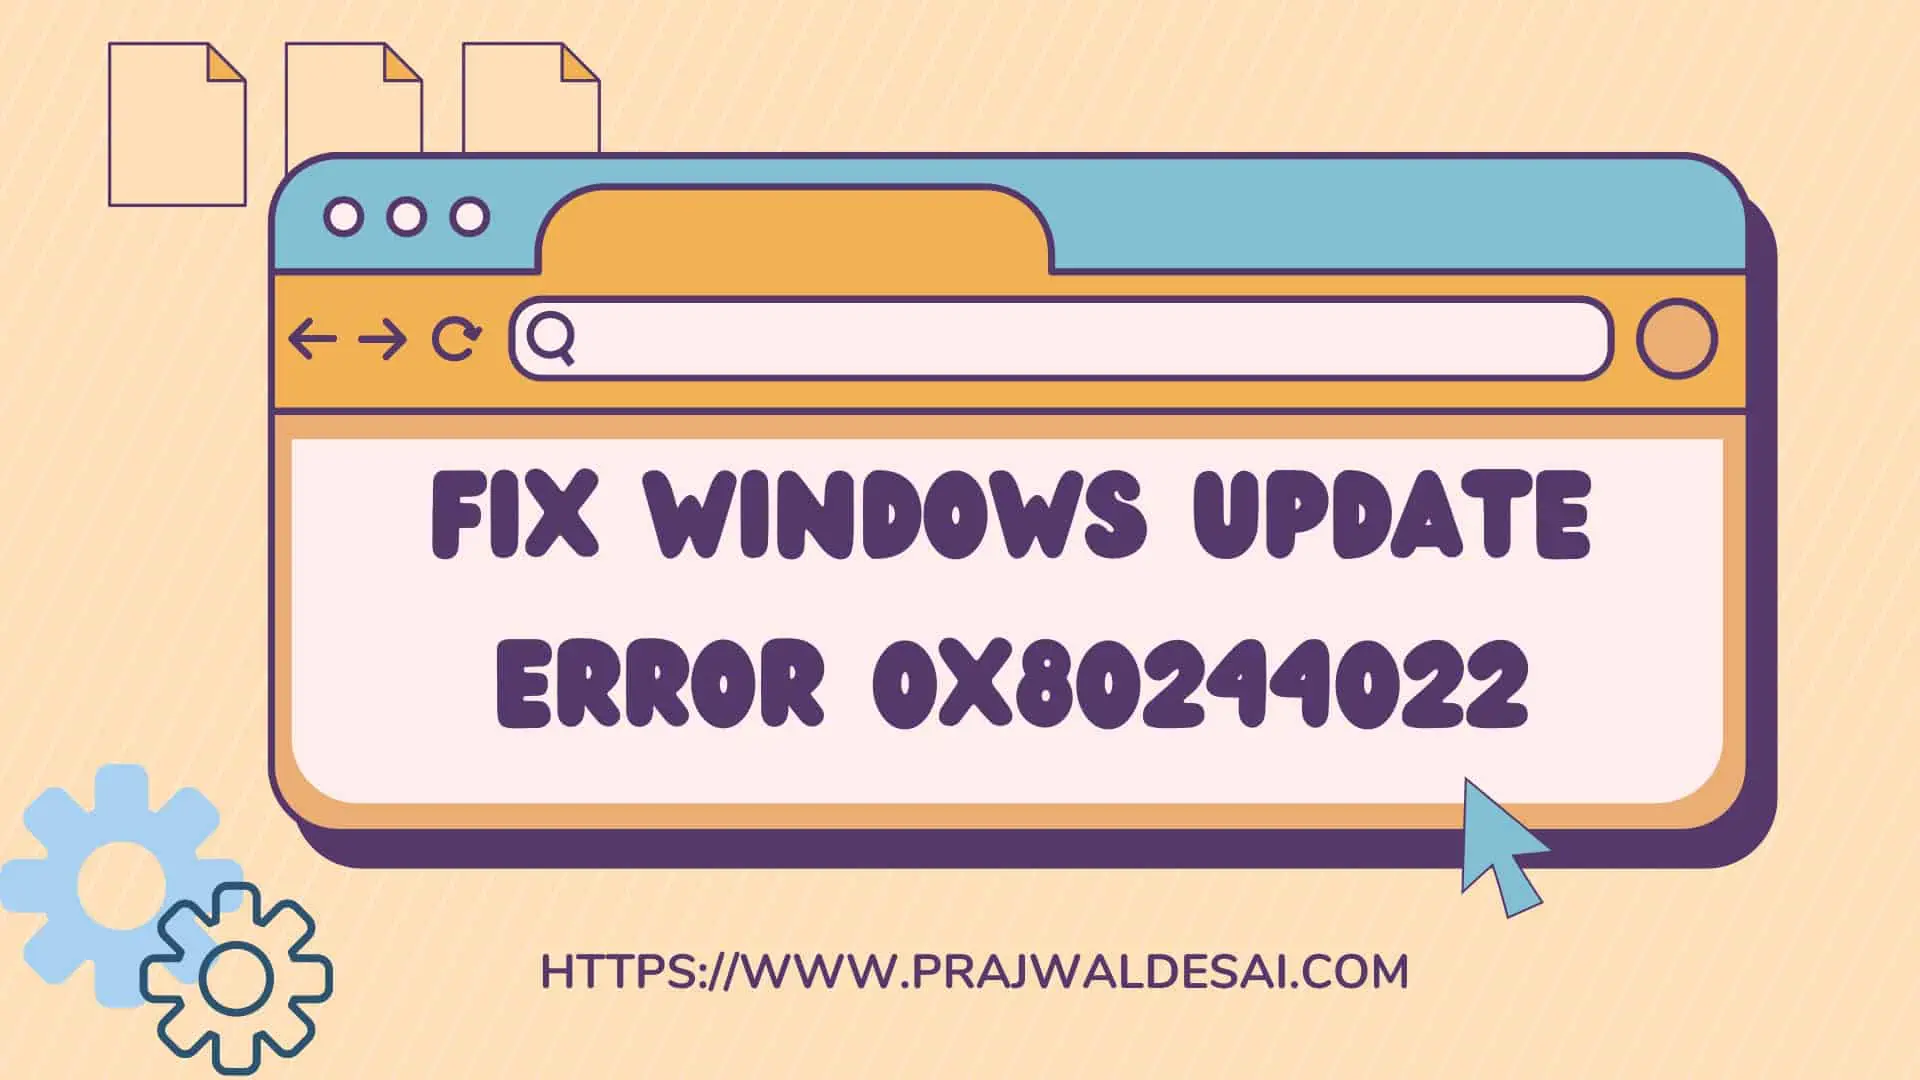 Fix Windows Update Error 0x80244022